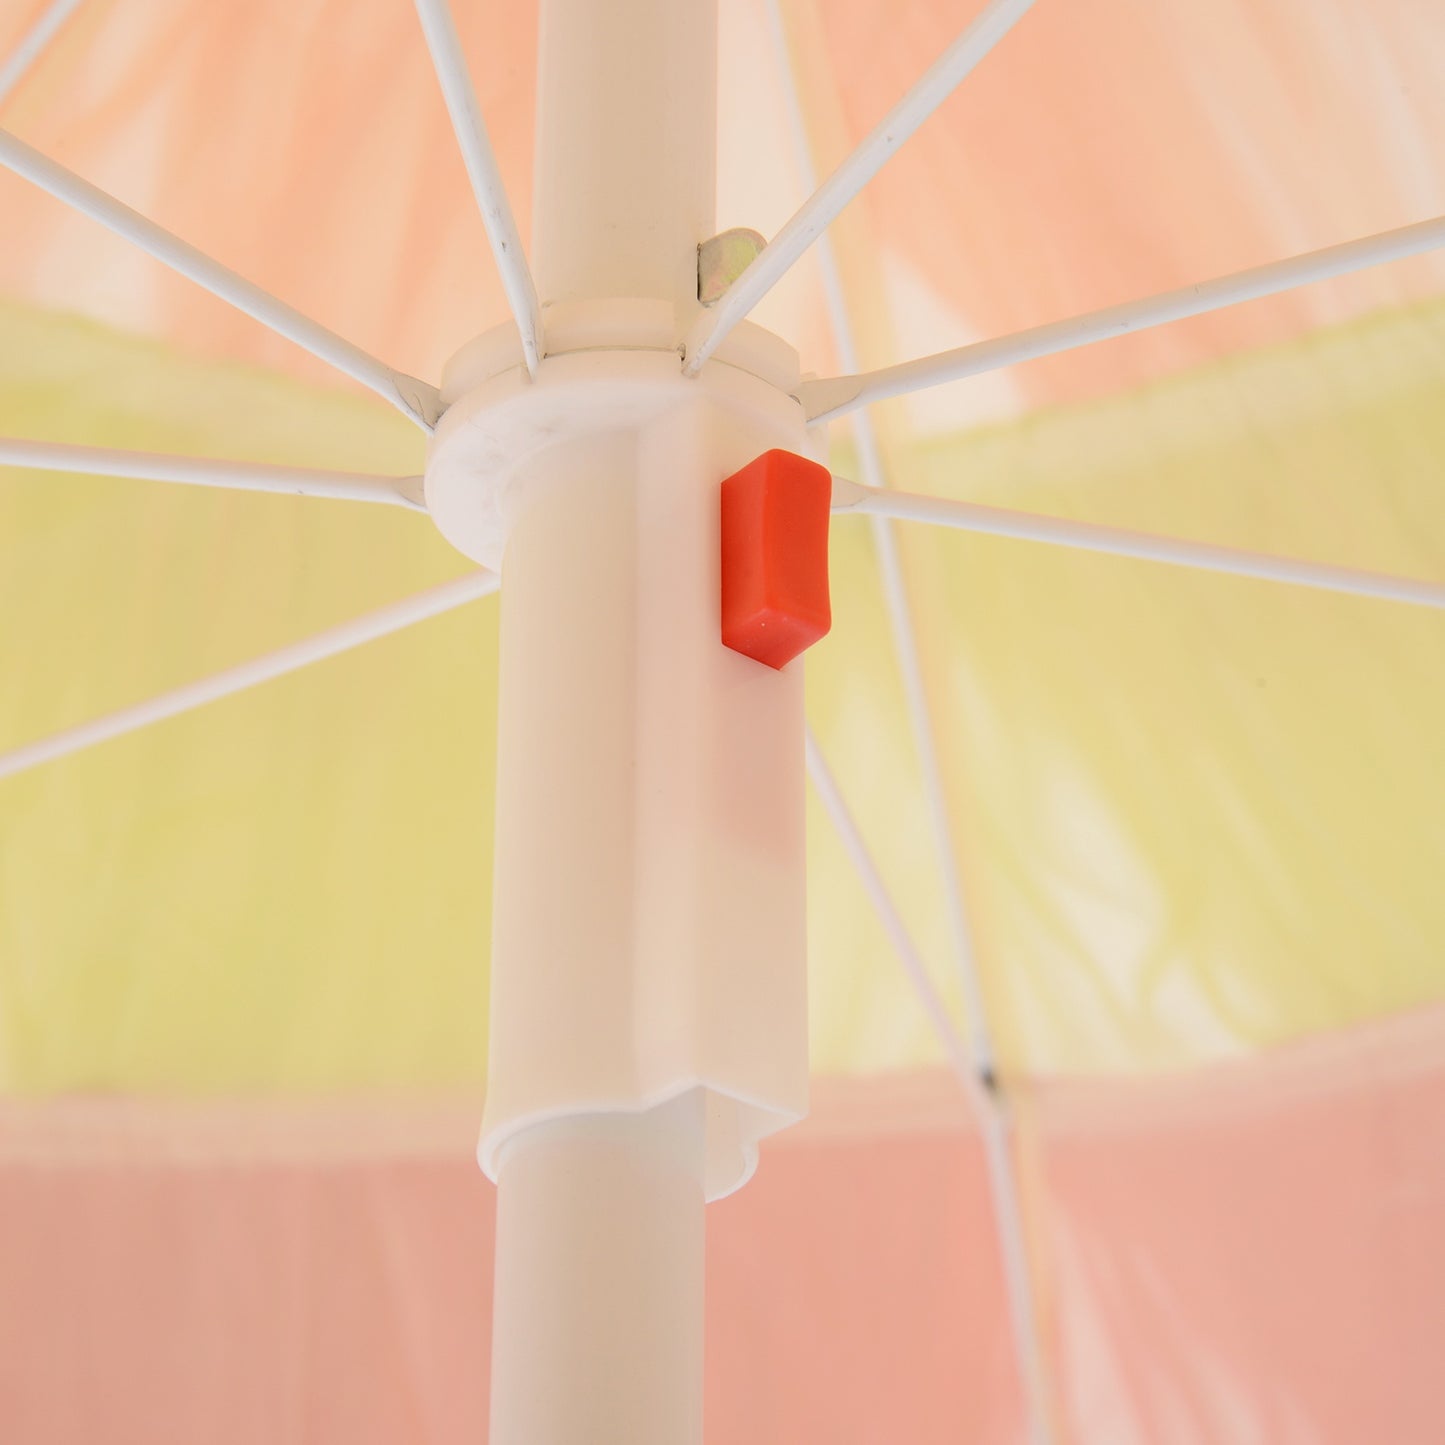 Nancy's Mora Parasol - Feestparaplu - Hawaï - Zonwering - Schaduw - Geel - Rood - Ø 160 cm